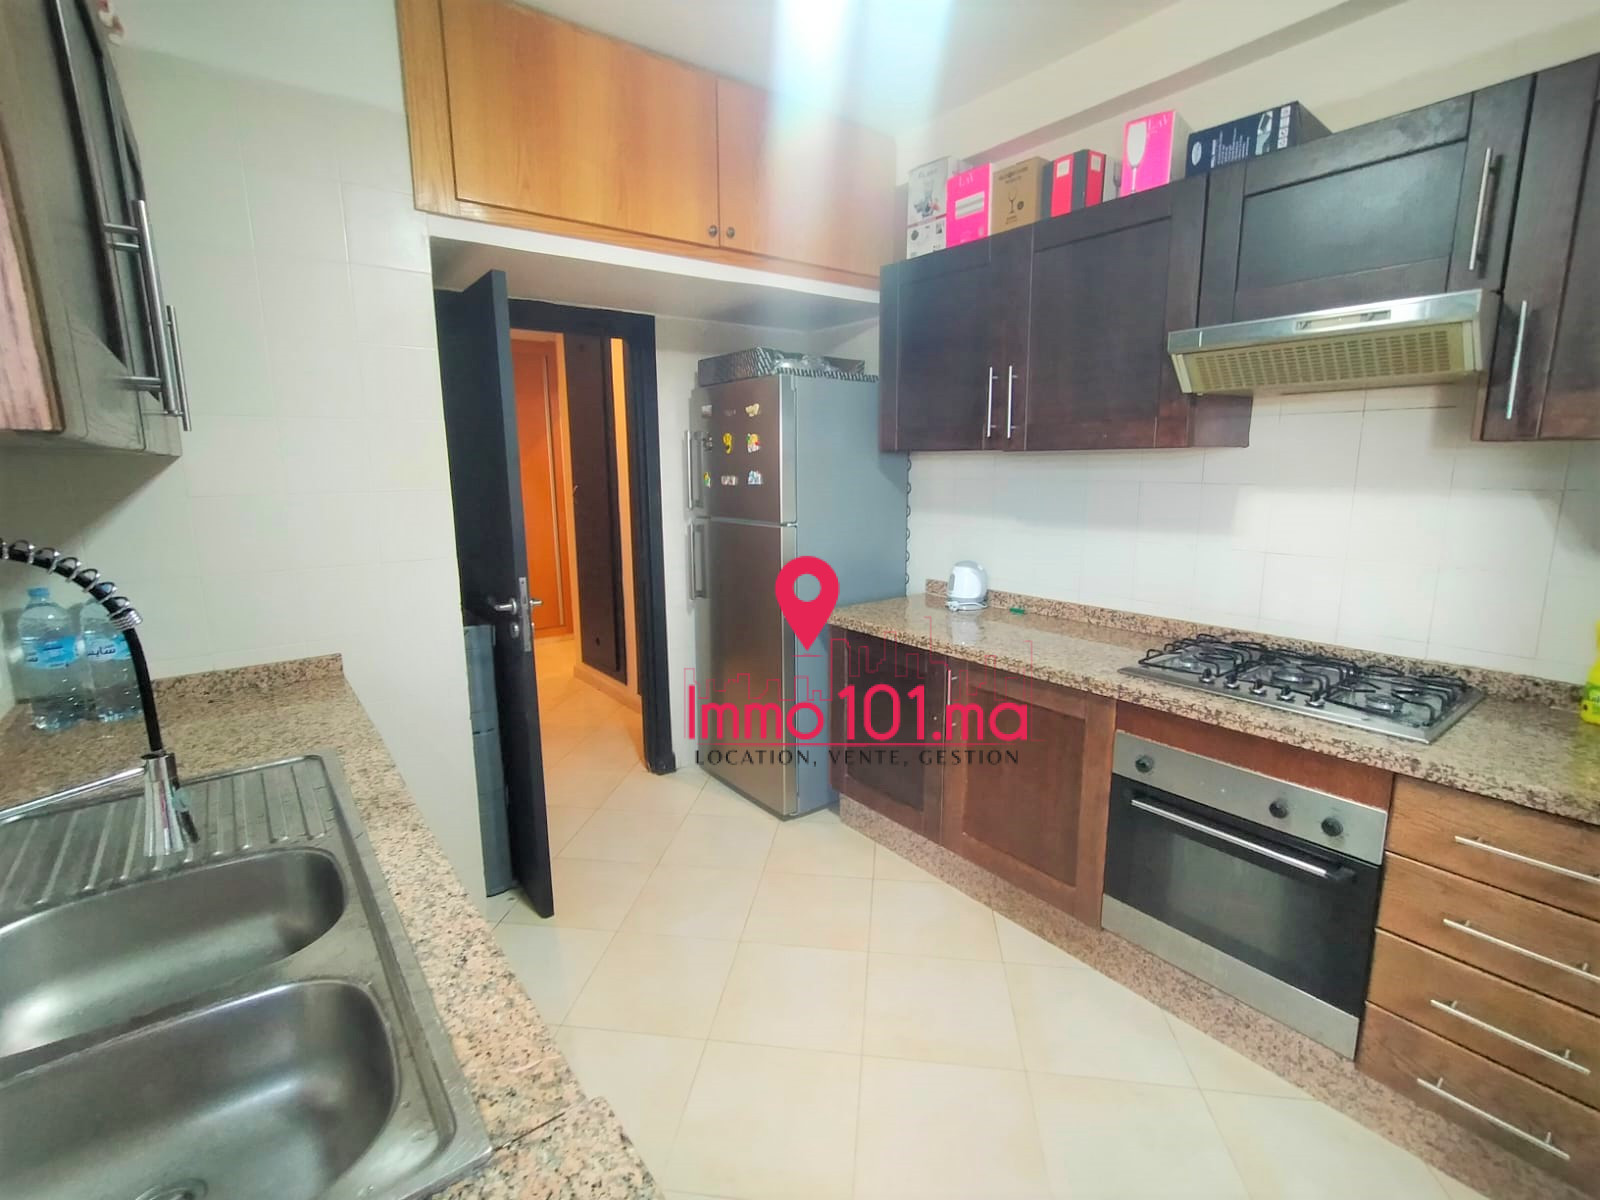 Location appartement meublé à Oulad Mtaa SILAM1366